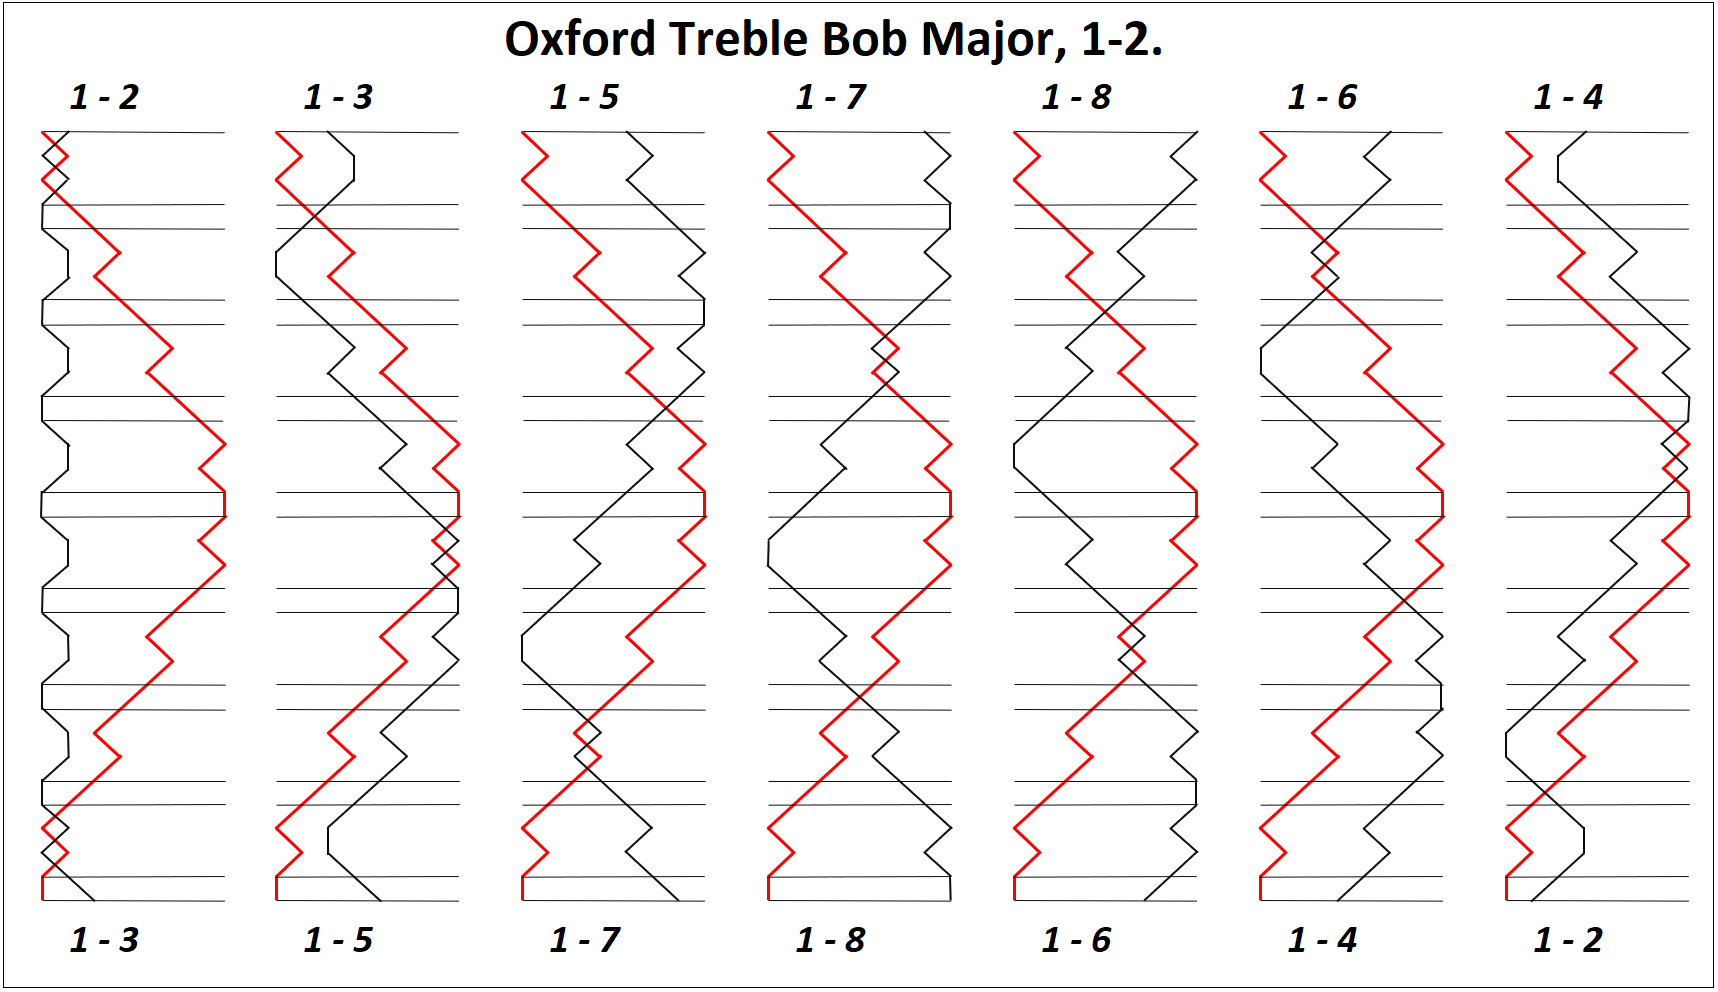 Oxford Treble Bob Major Double line for 1-2